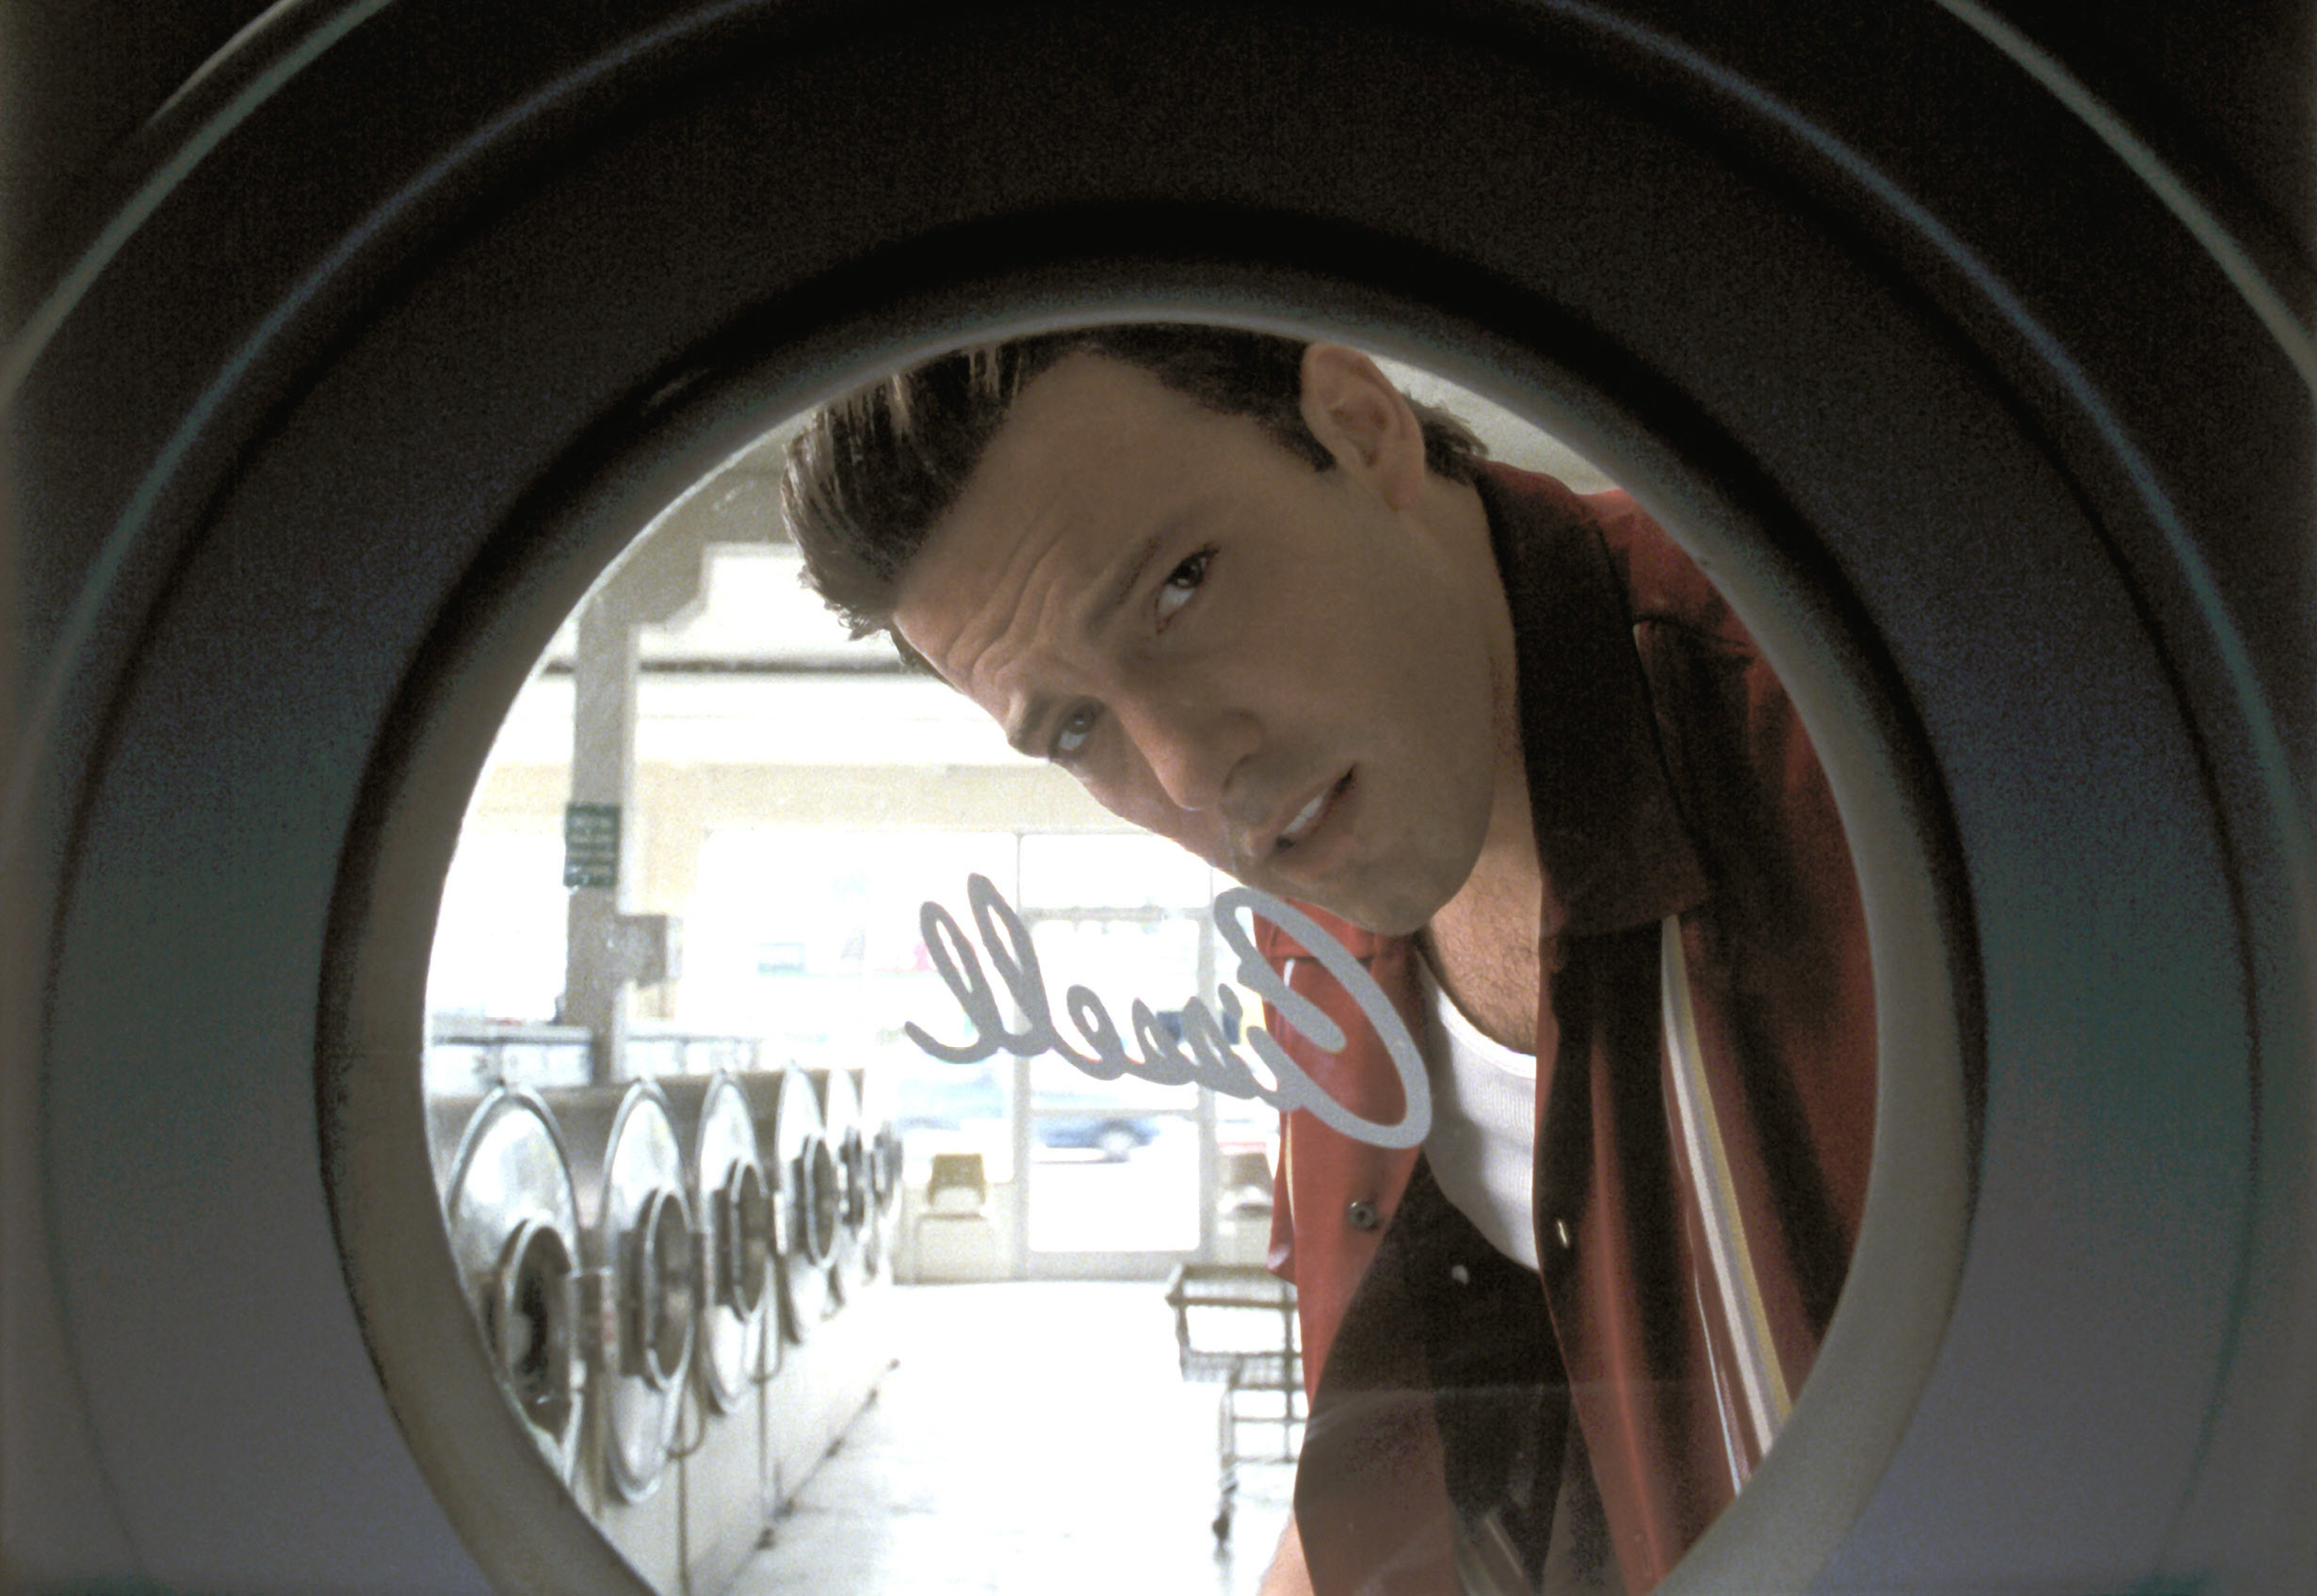 Affleck looks into a washing machine